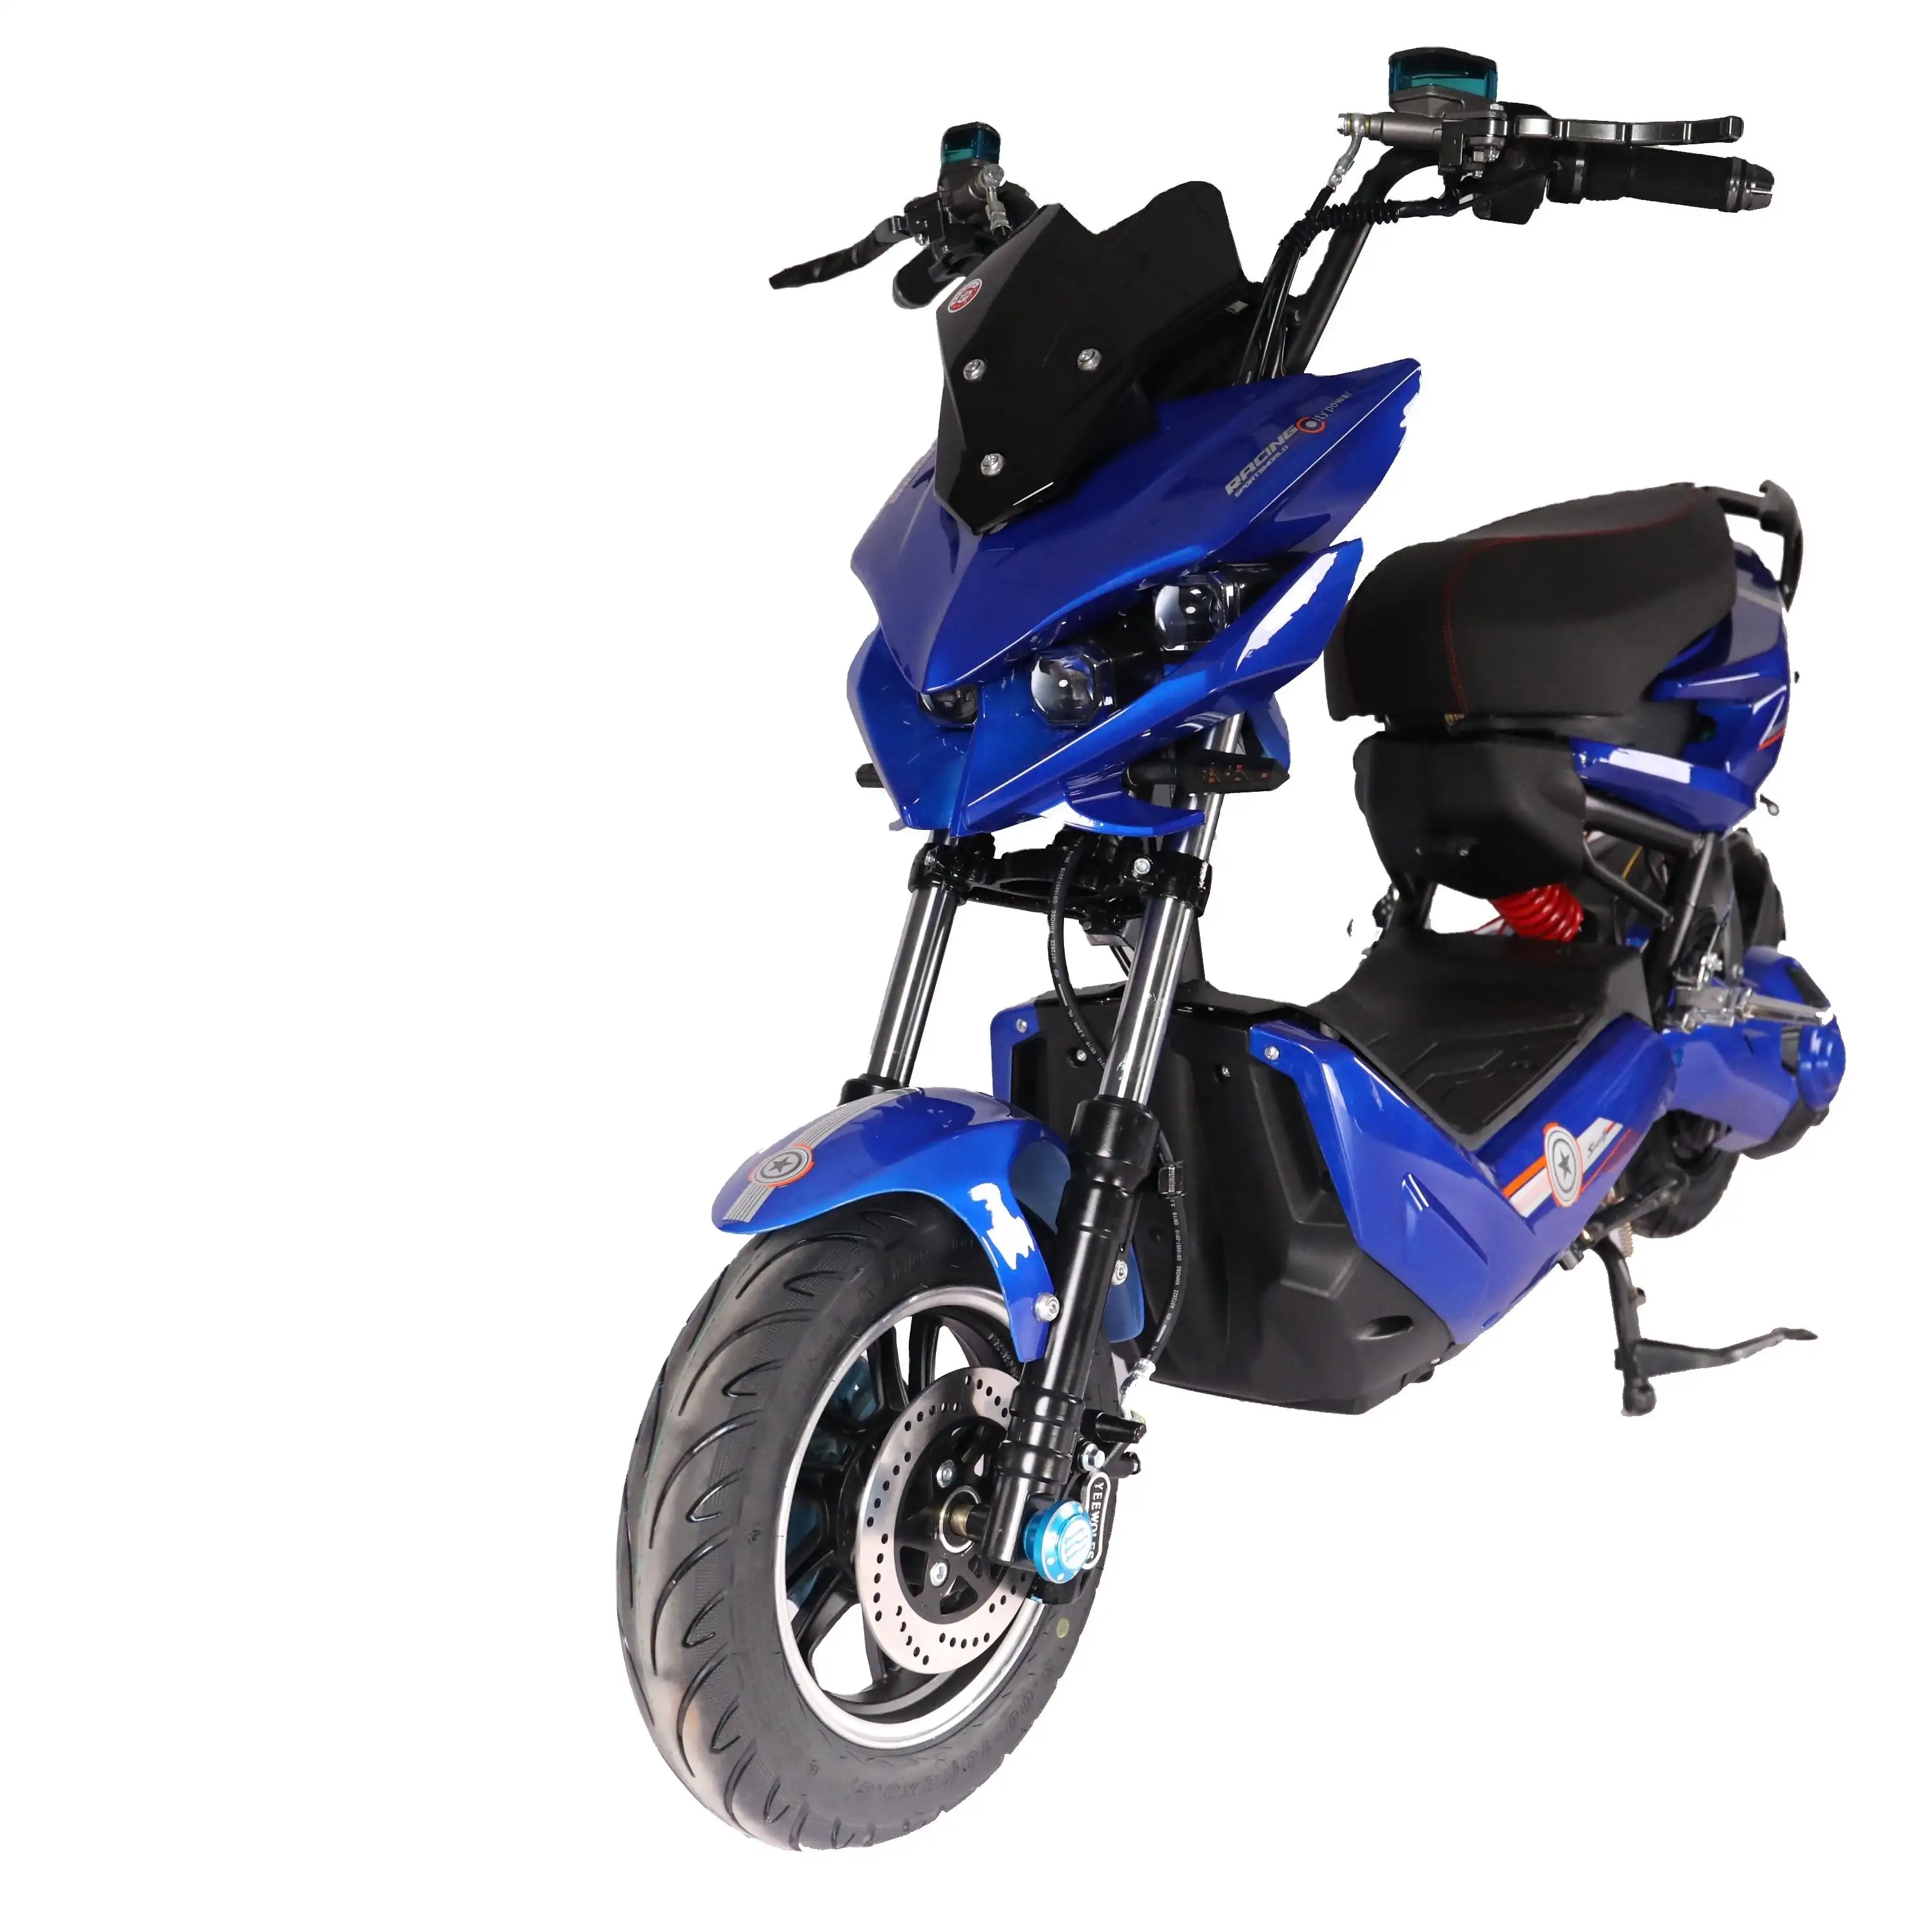 Sepeda motor skuter Trail 72v, sepeda motor elektrik olahraga ganda, tampilan digital mobilitas jalanan off-road klasik